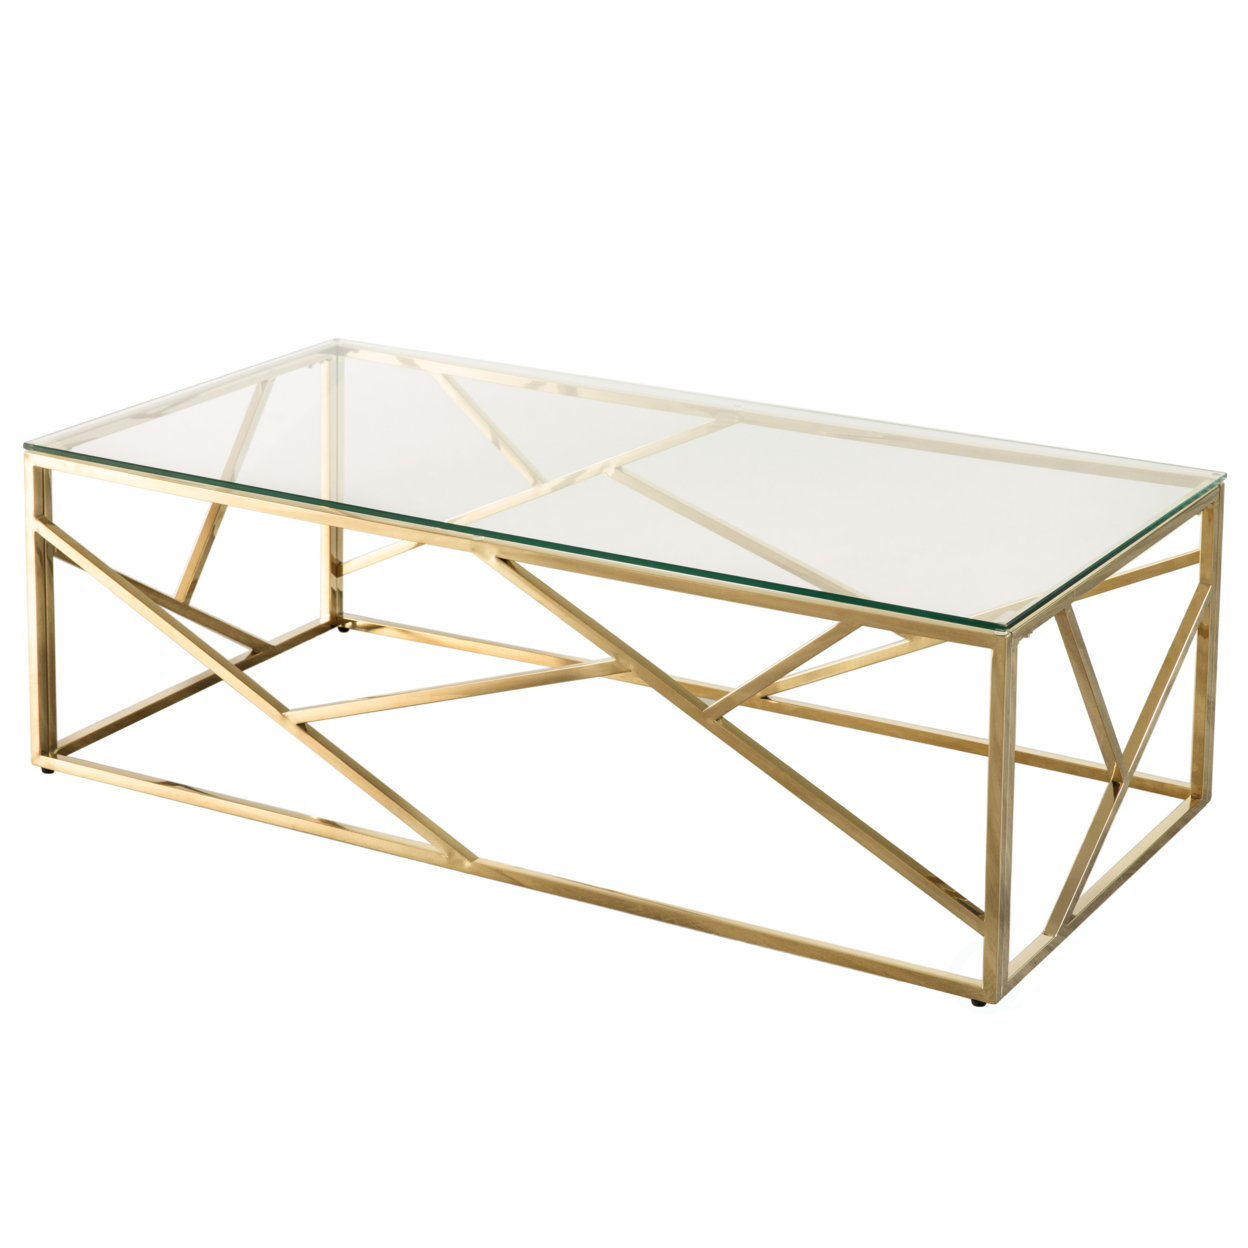 Decorative Rectangular Glass Top Metal Modern Coffee Table - Silver